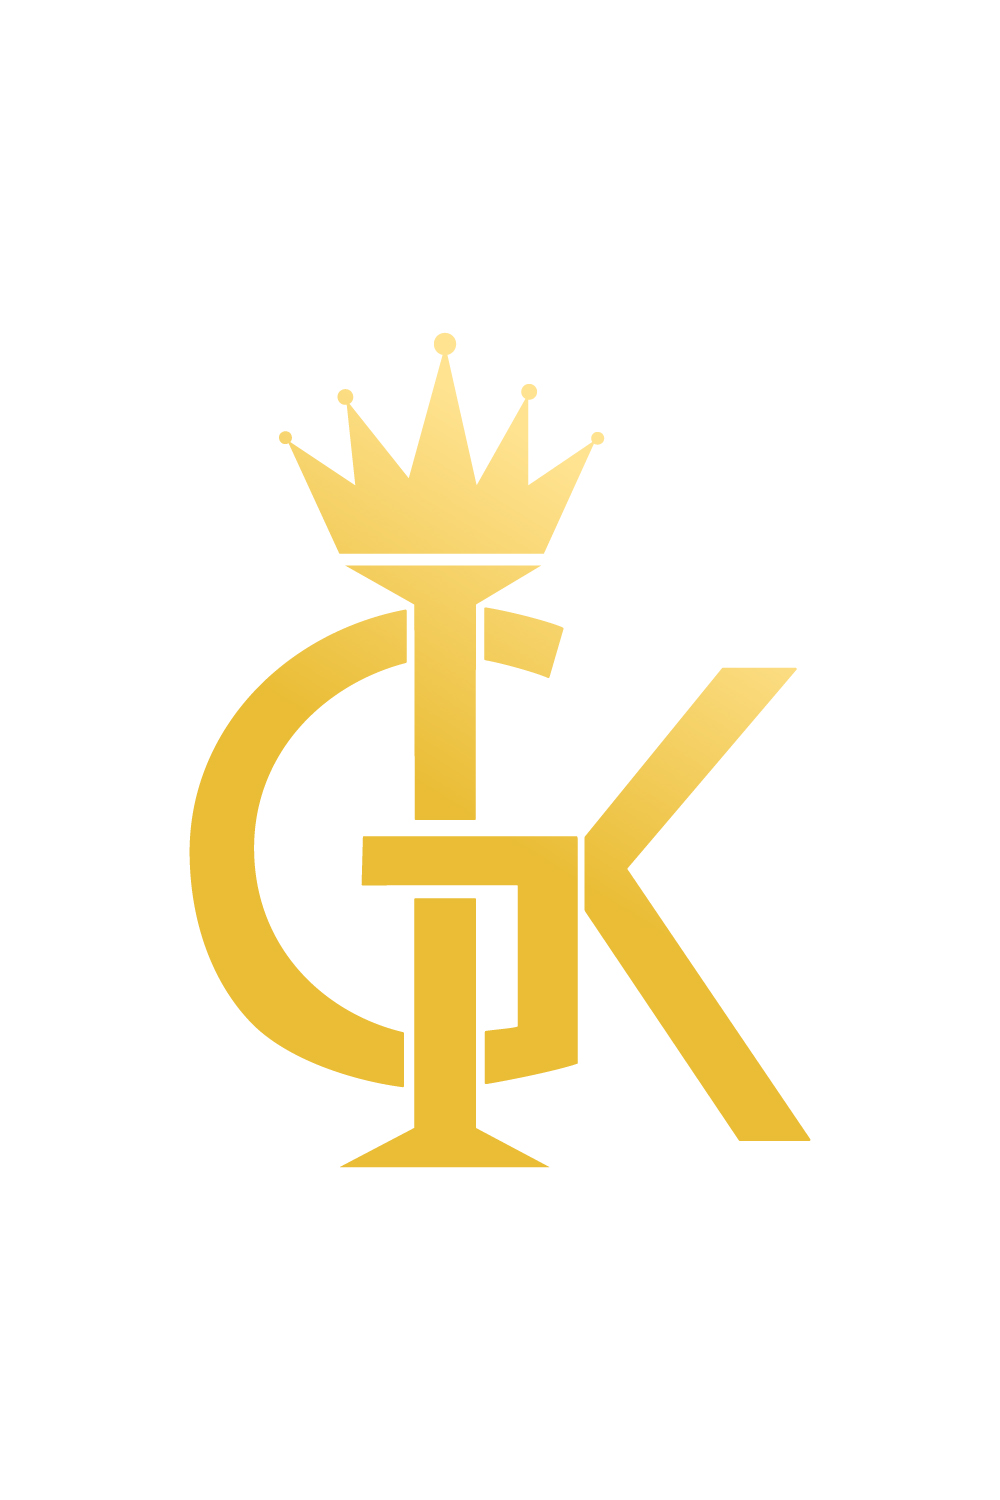 Luxury GK Crown logo design vector template images GK letters logo golden color icon KG logo design pinterest preview image.